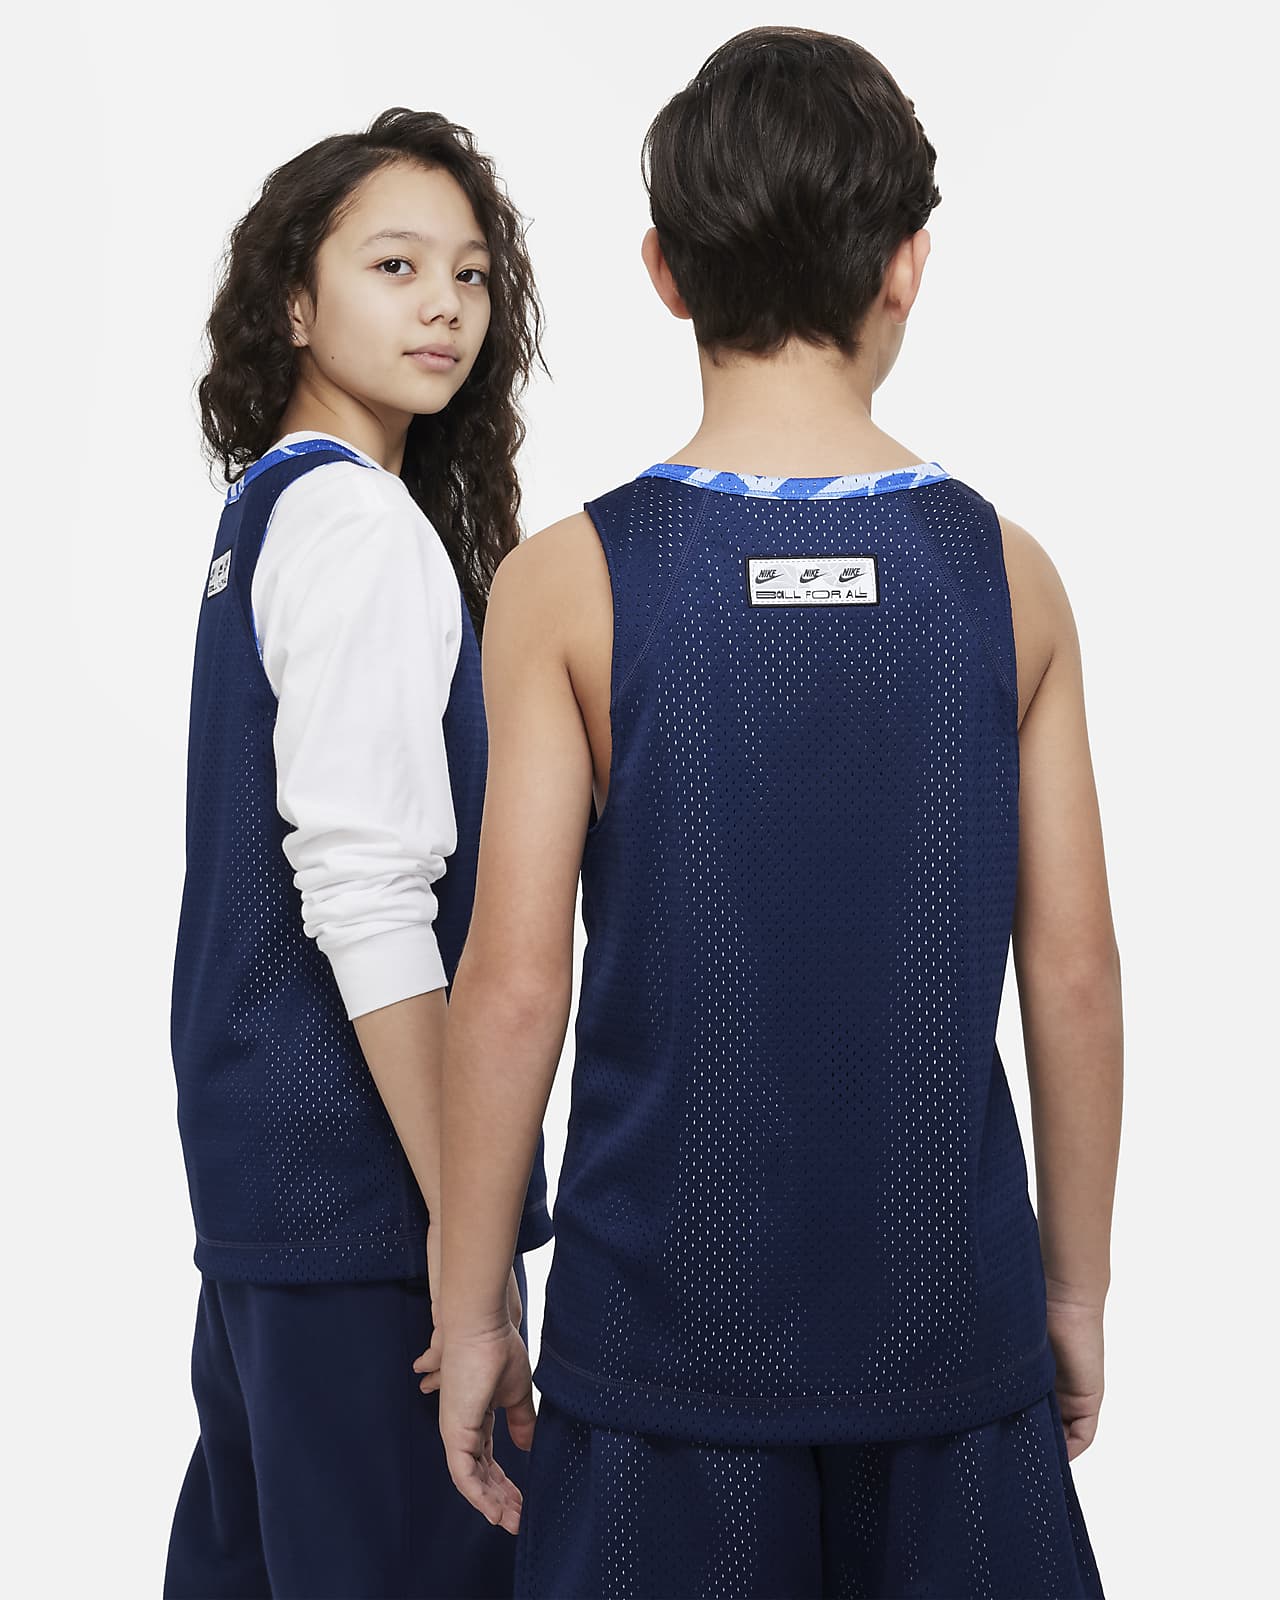 Nike Culture Of Basketball Big Kids' Reversible Basketball Jersey